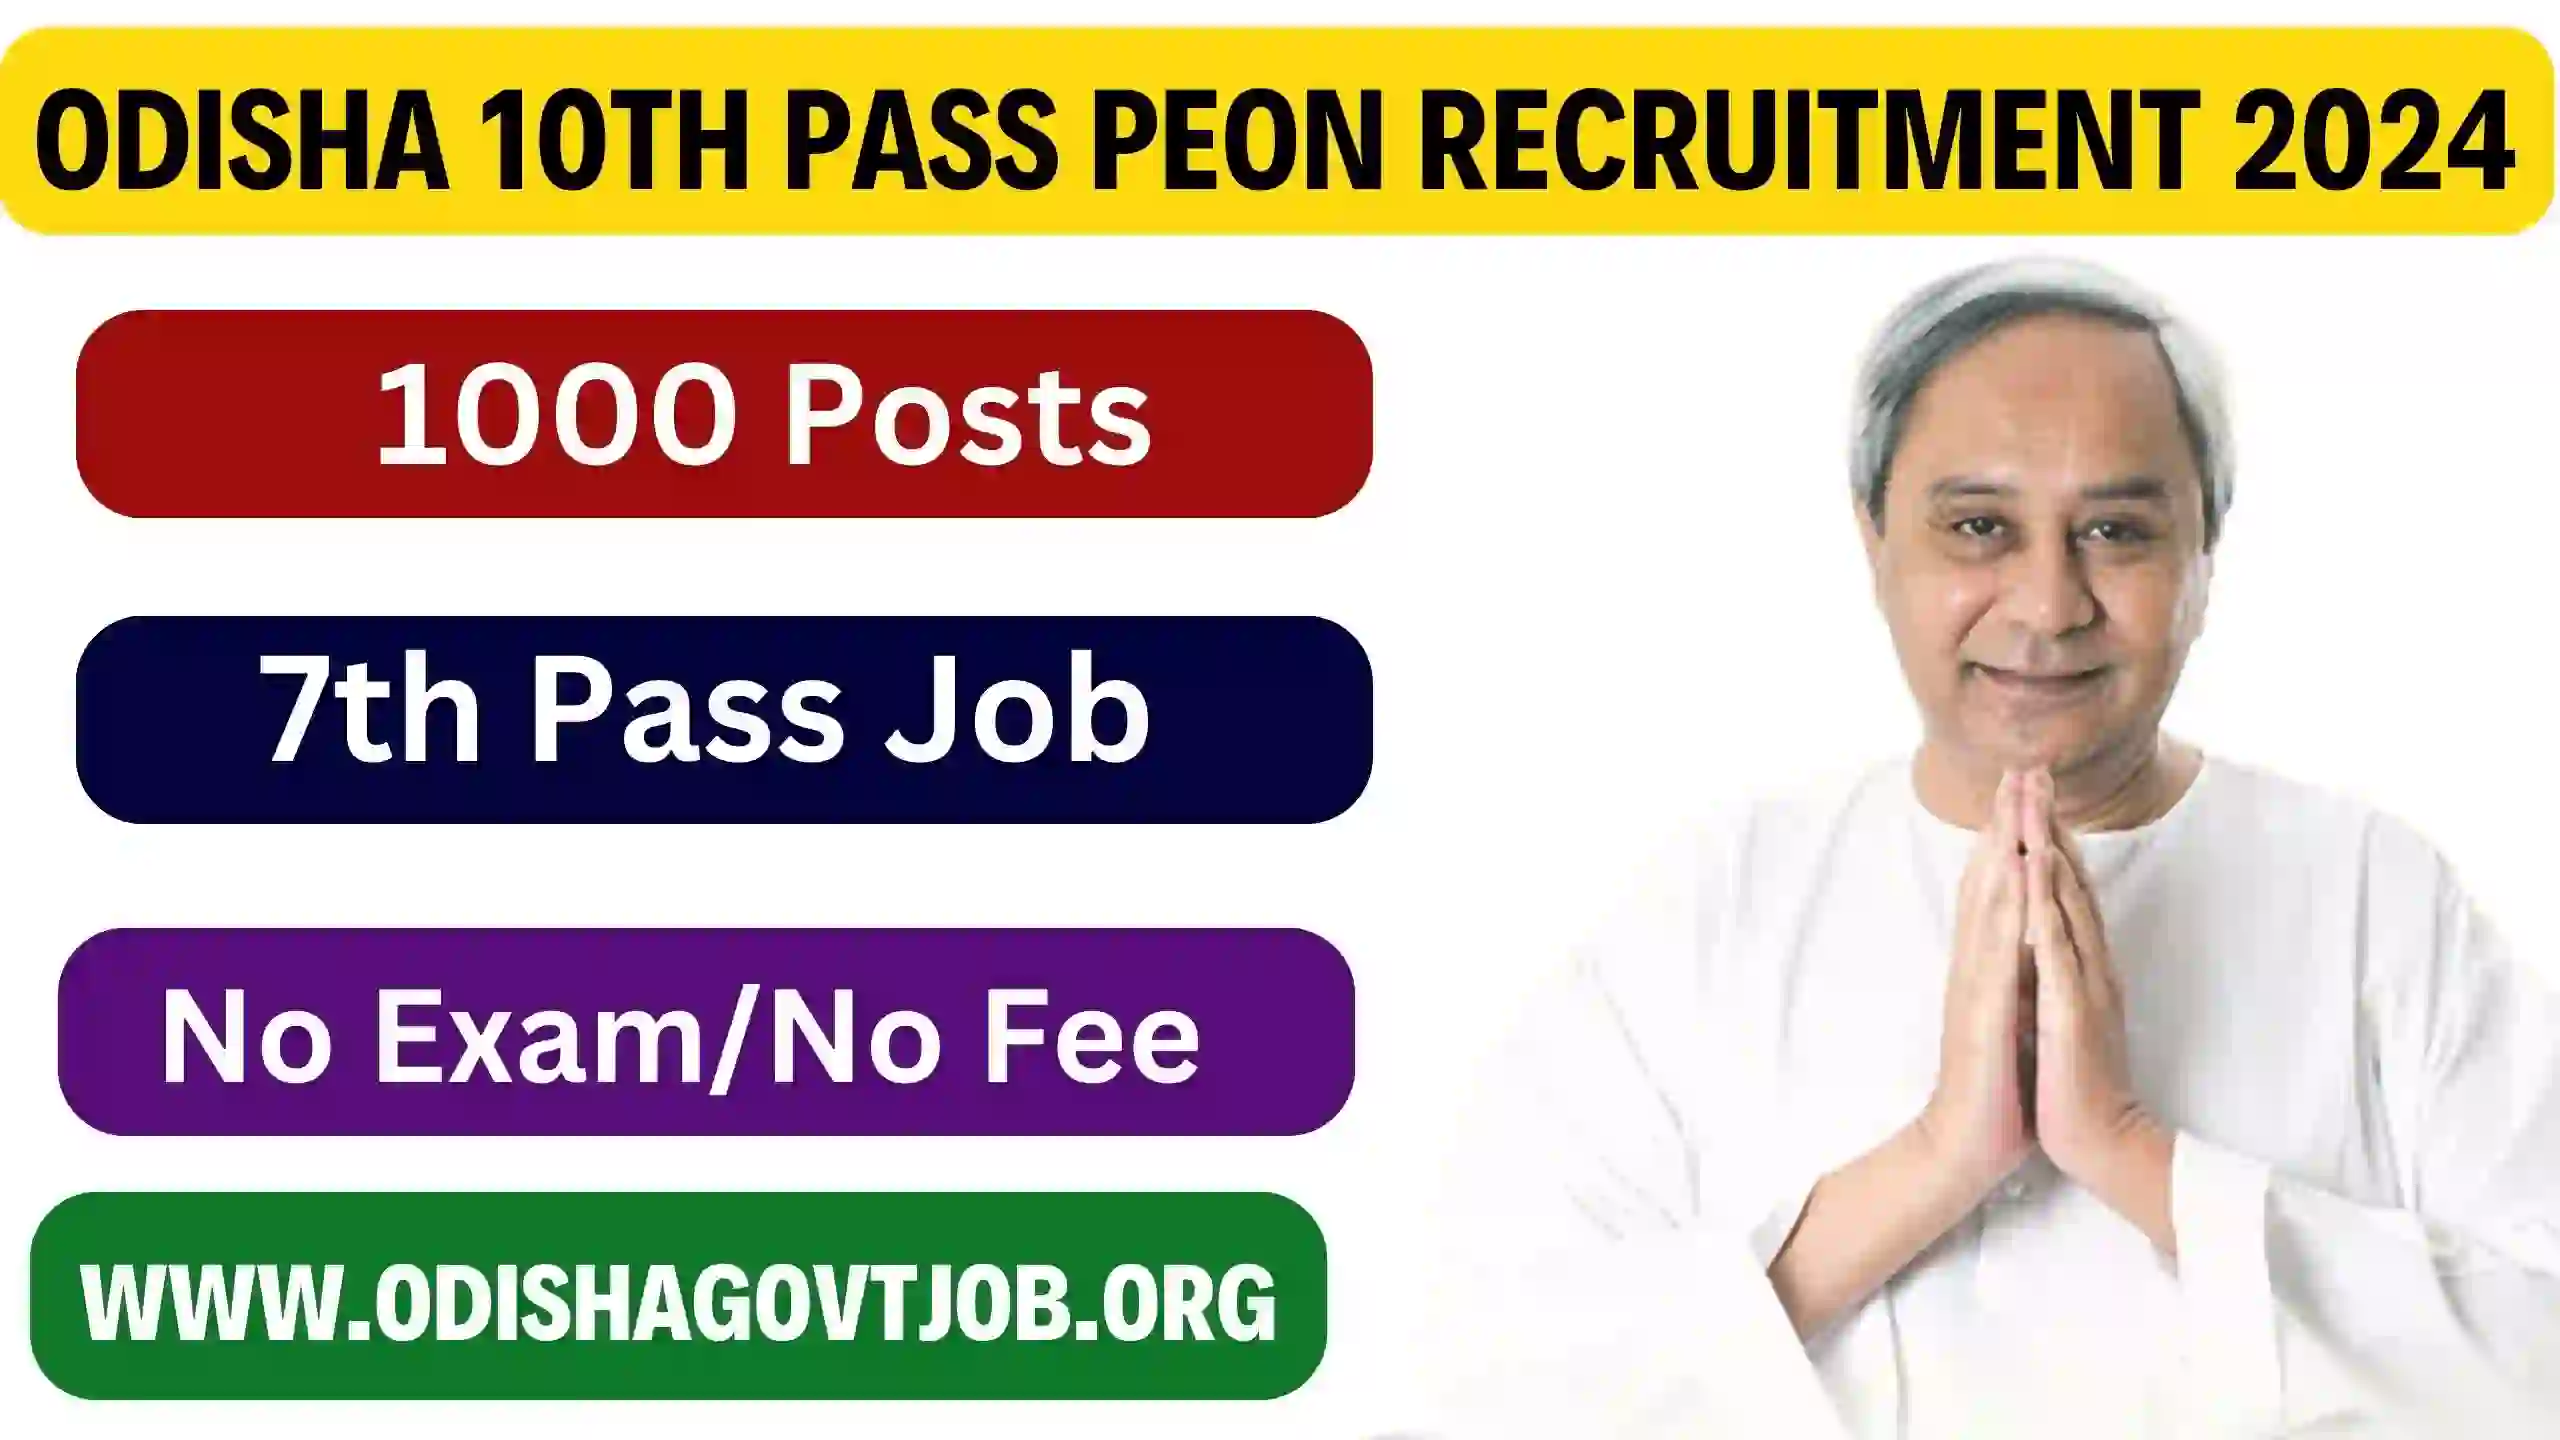 Odisha 10th Pass Peon Recruitment 2024